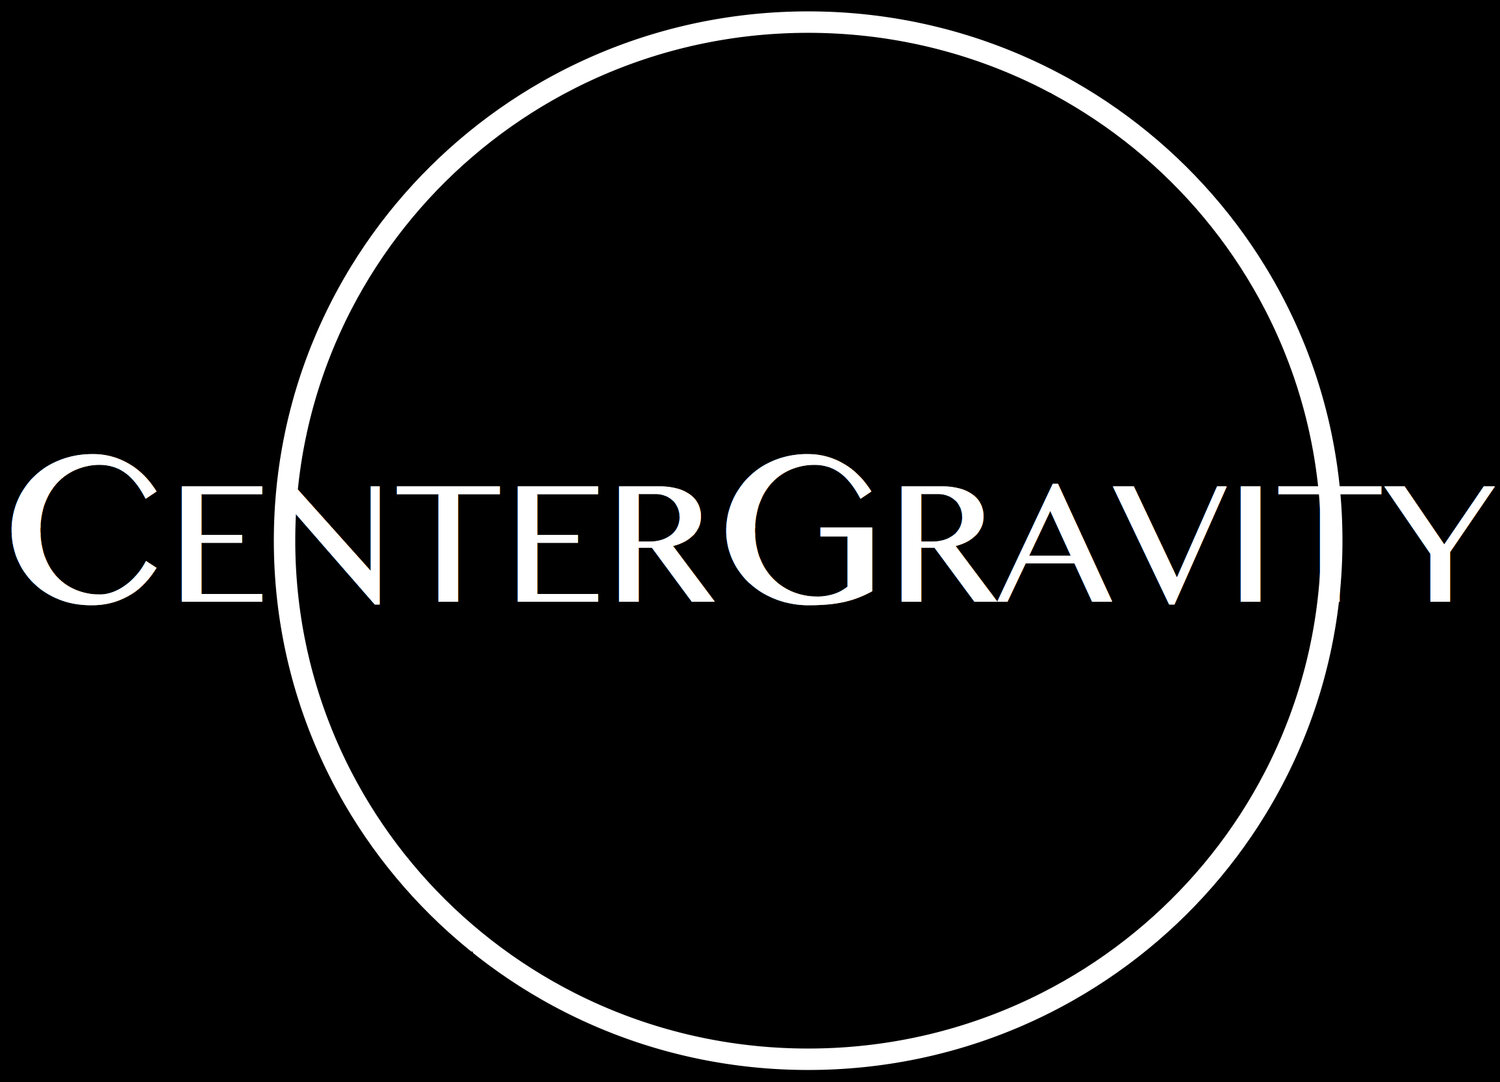 Center Gravity